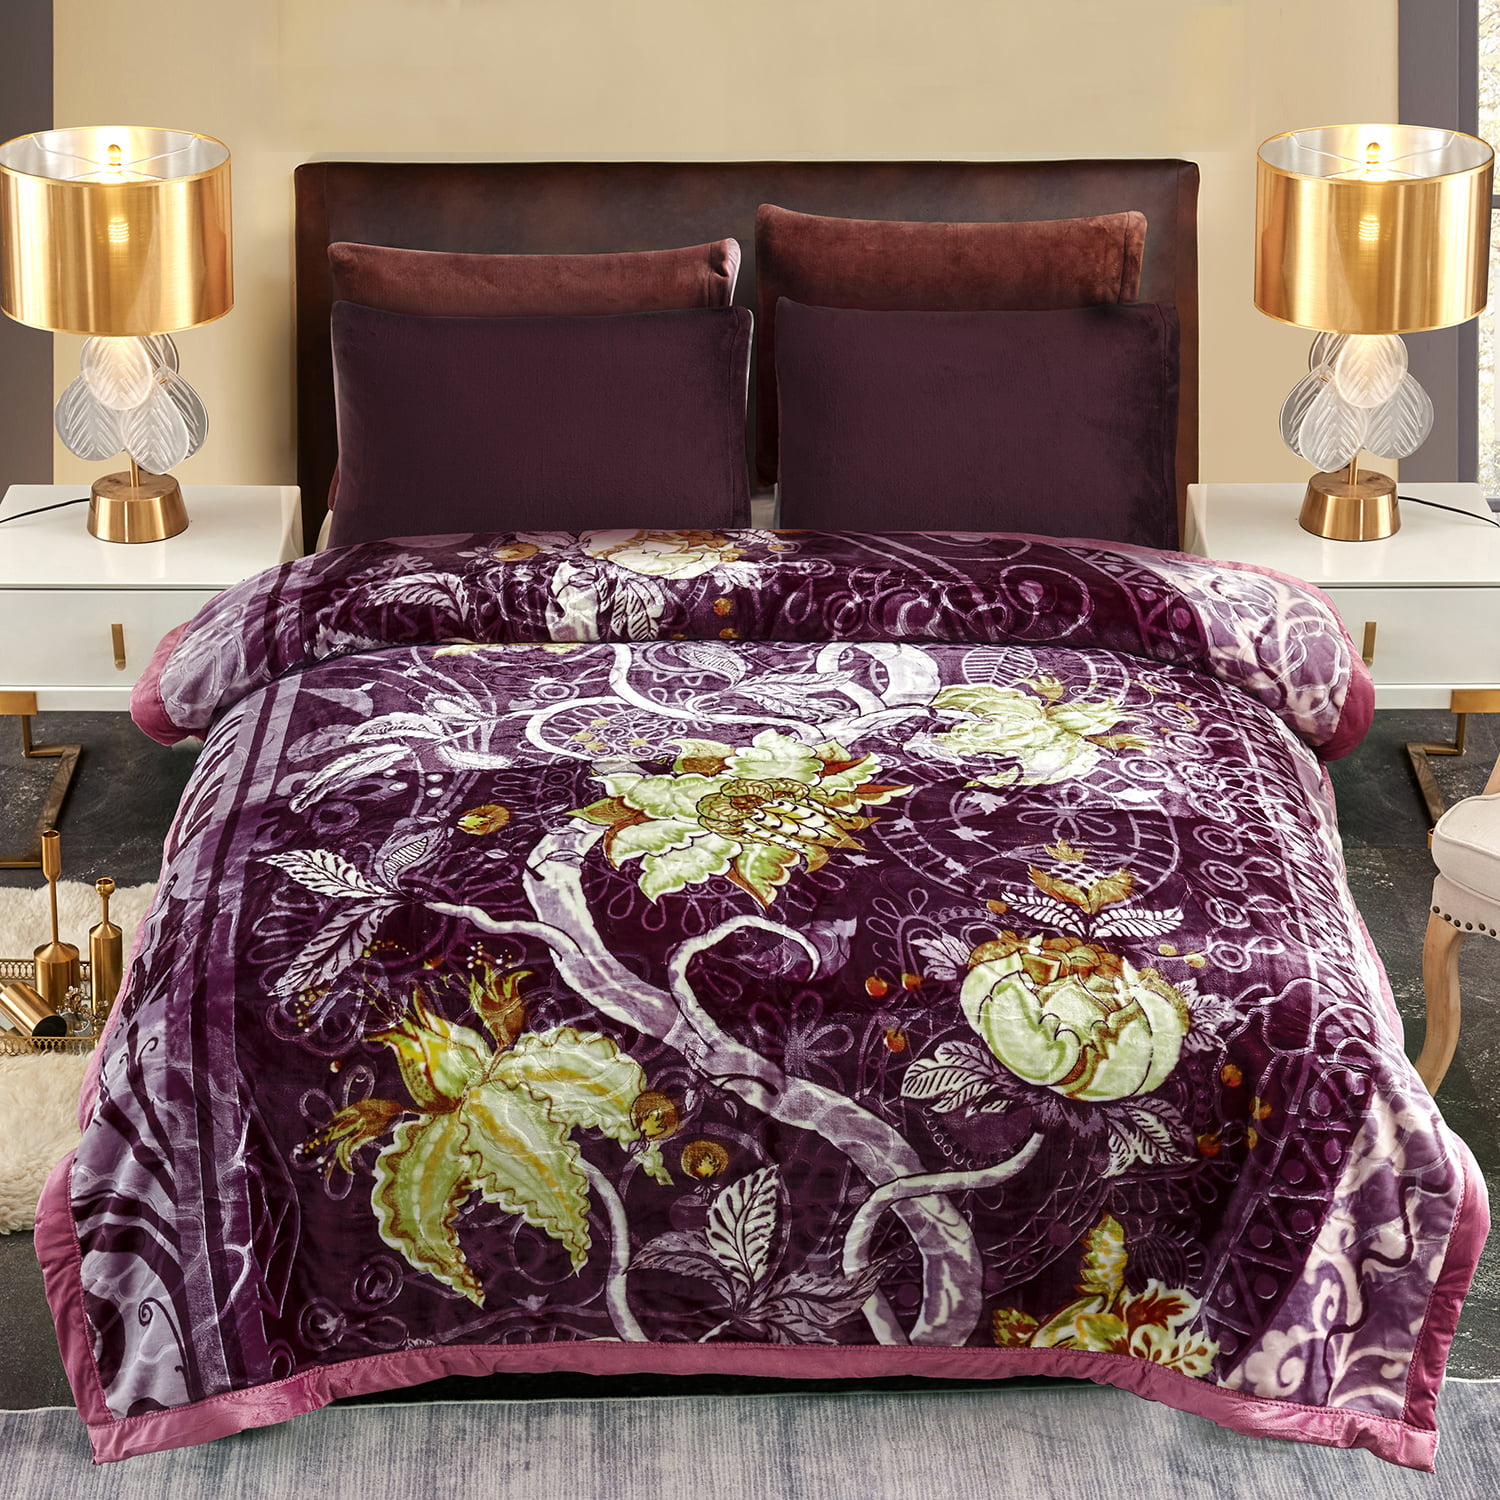 Jml Plush Mink Blanket Queen Soft, Blankets For Queen Size Beds